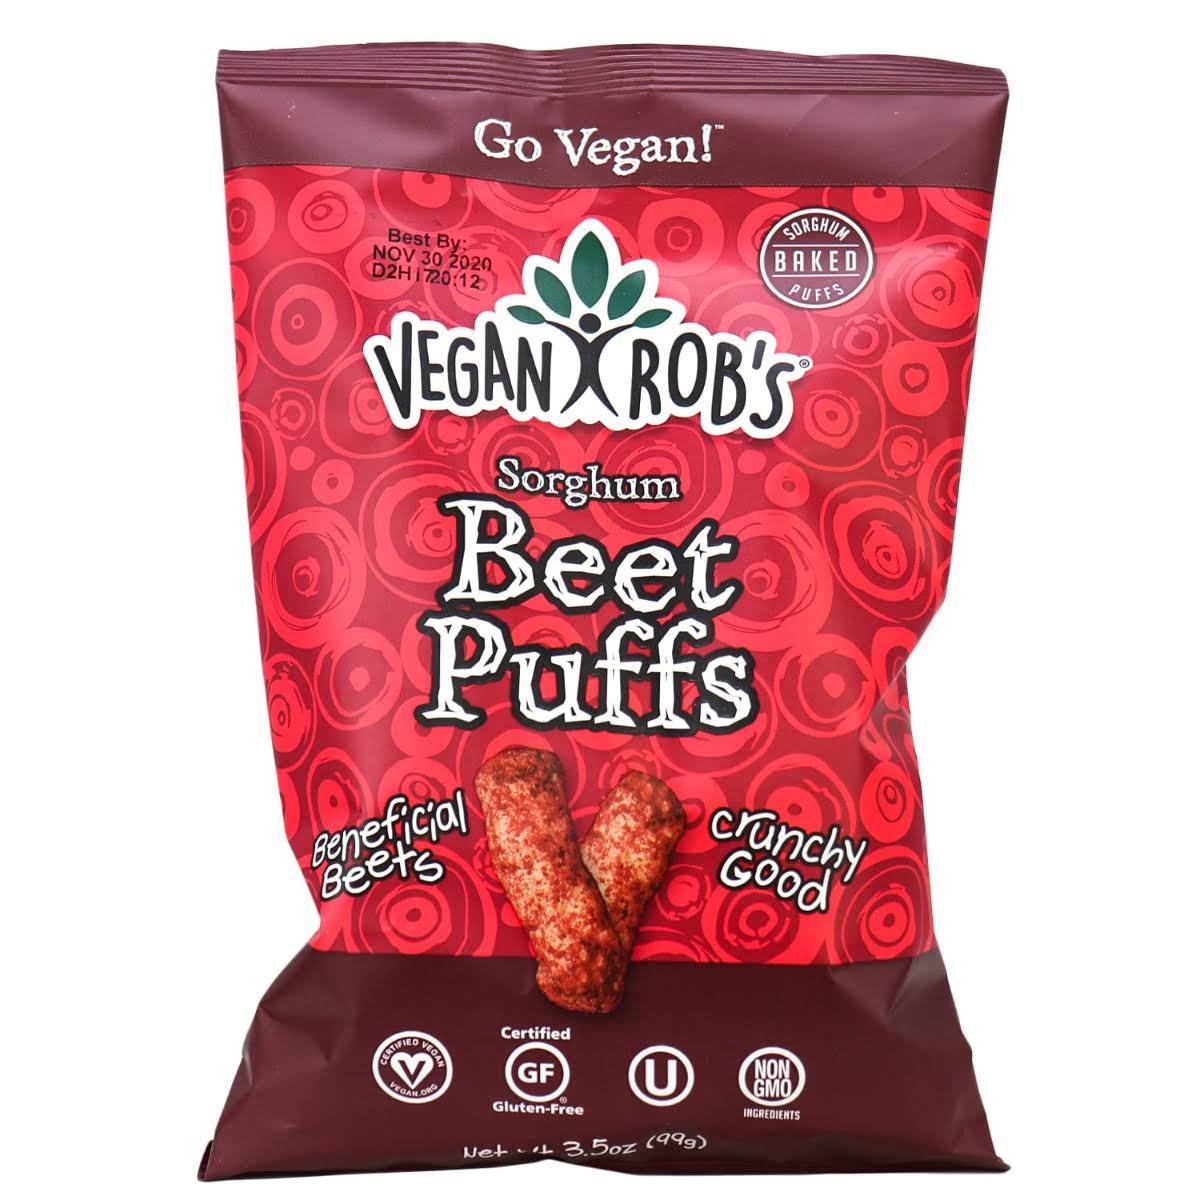 Vegan Rob's - Beet Puffs, 3.5 Oz